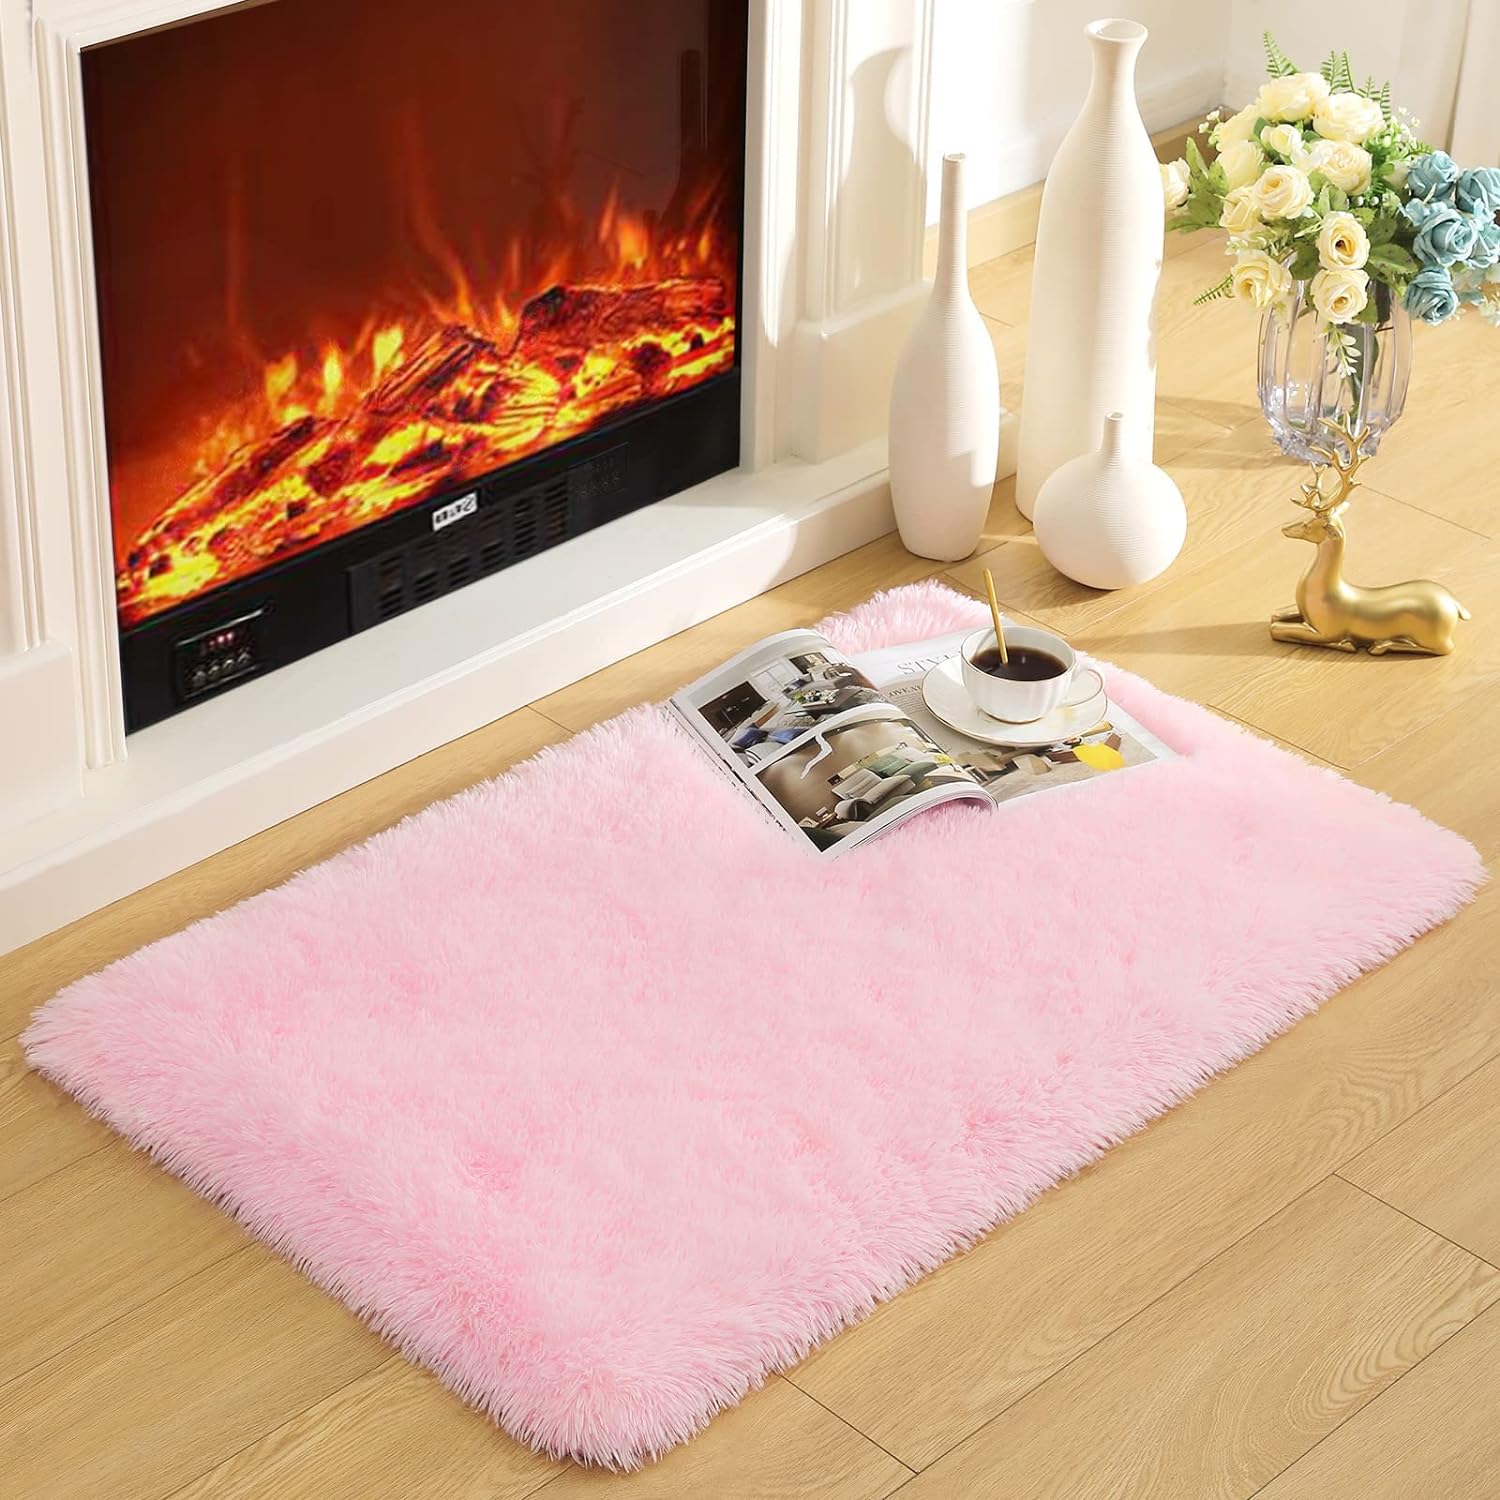 Merelax Soft Modern Indoor Shaggy Area Rug for Bedroom Livingroom Dorm Kids Room Home Decorative, Non-Slip Plush Fluffy Furry Fur Rugs Comfy Nursery Accent Floor Carpet 2x3 Feet, Pink